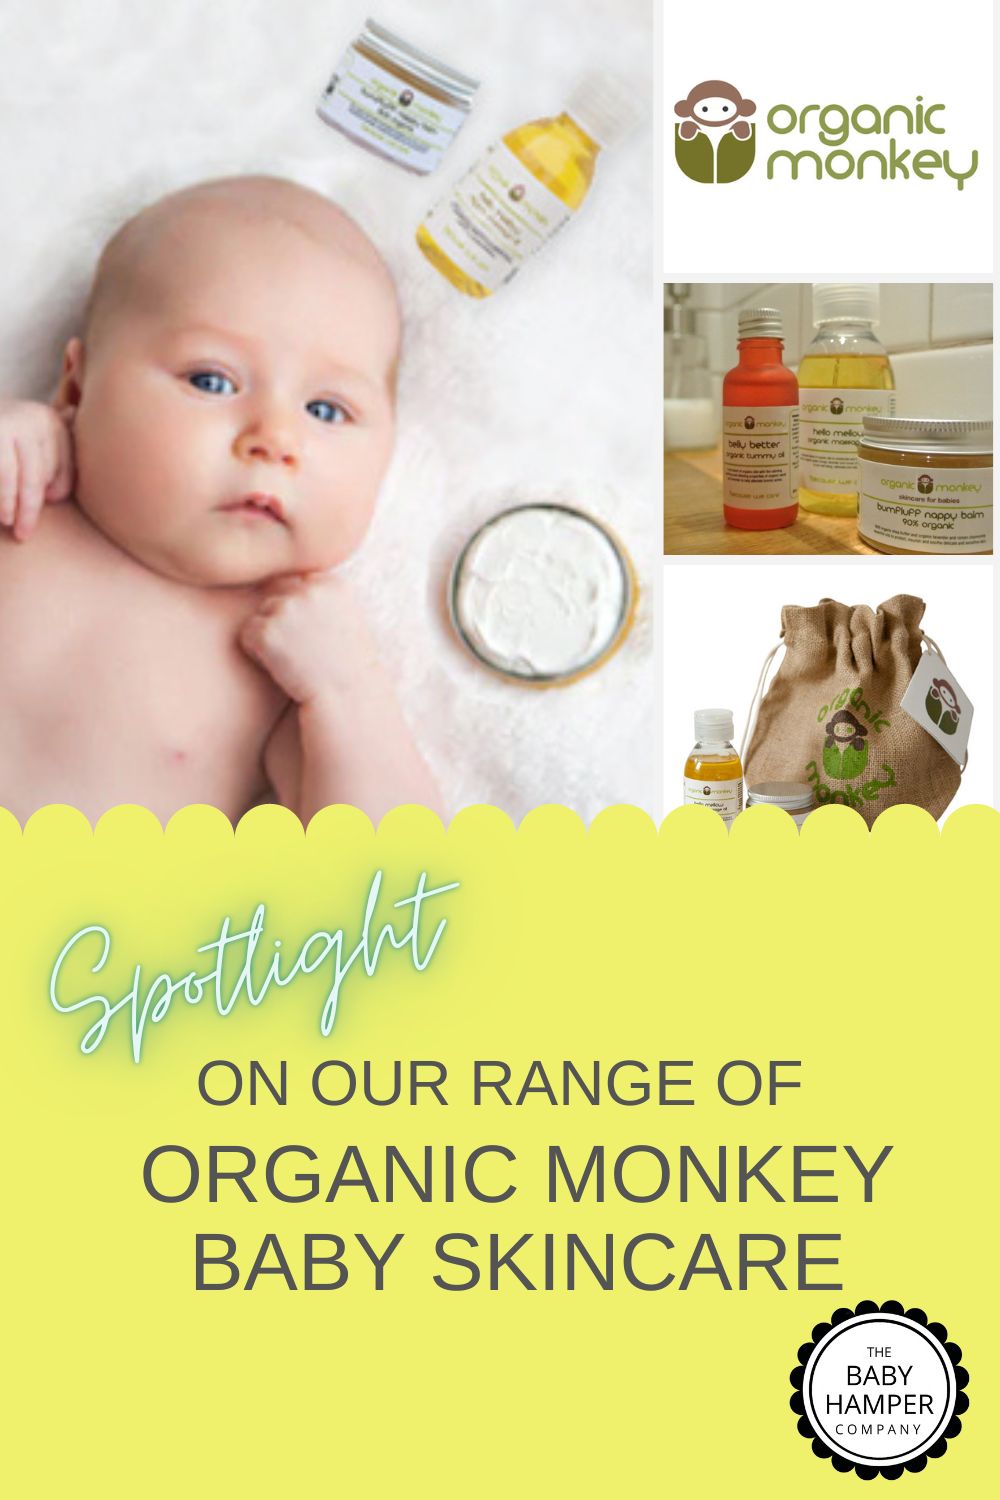 Spotlight on our range of ORGANIC MONKEY BABY SKINCARE